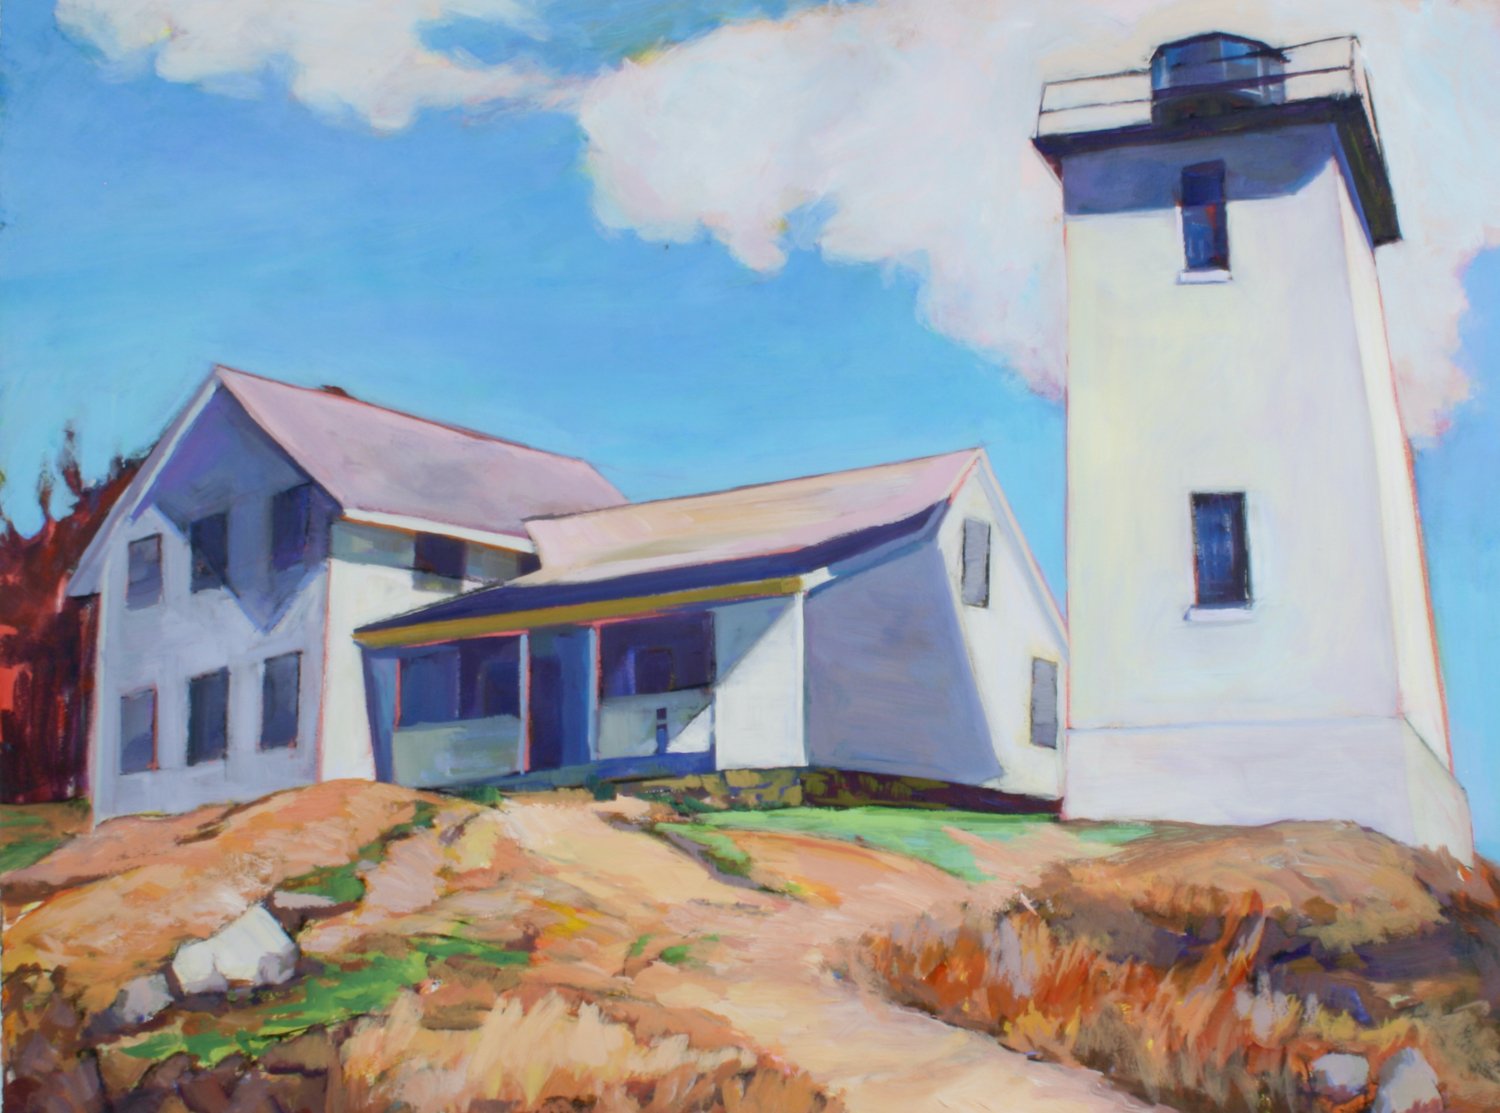   Buildings Swans Island Lighthouse   by Jill Pottle 